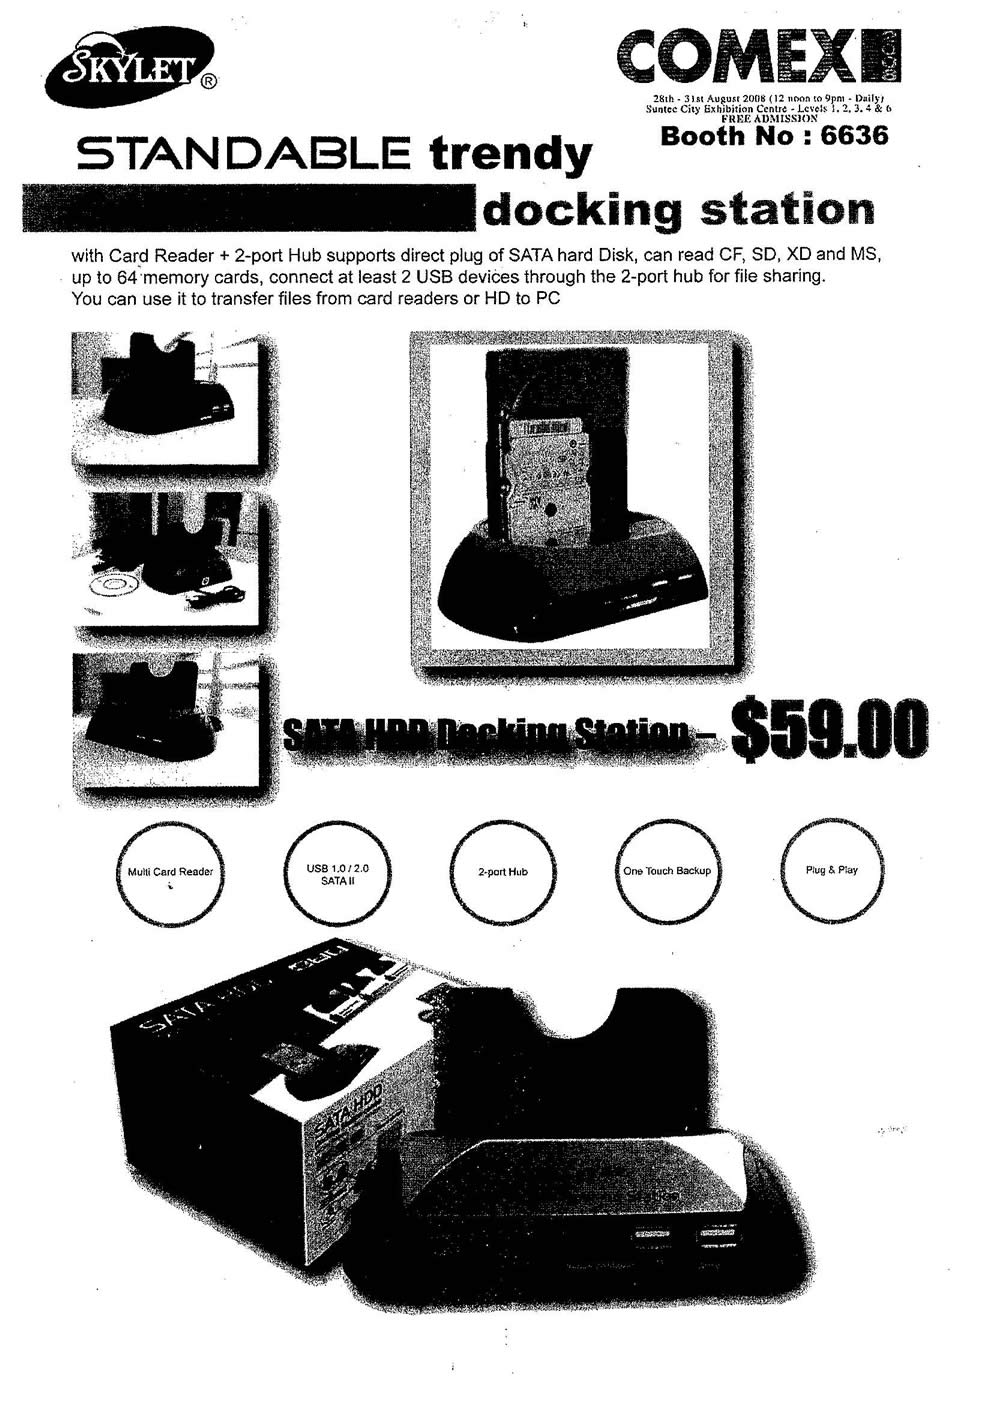 Comex 2008 price list image brochure of Skylet Docking Station Page 1